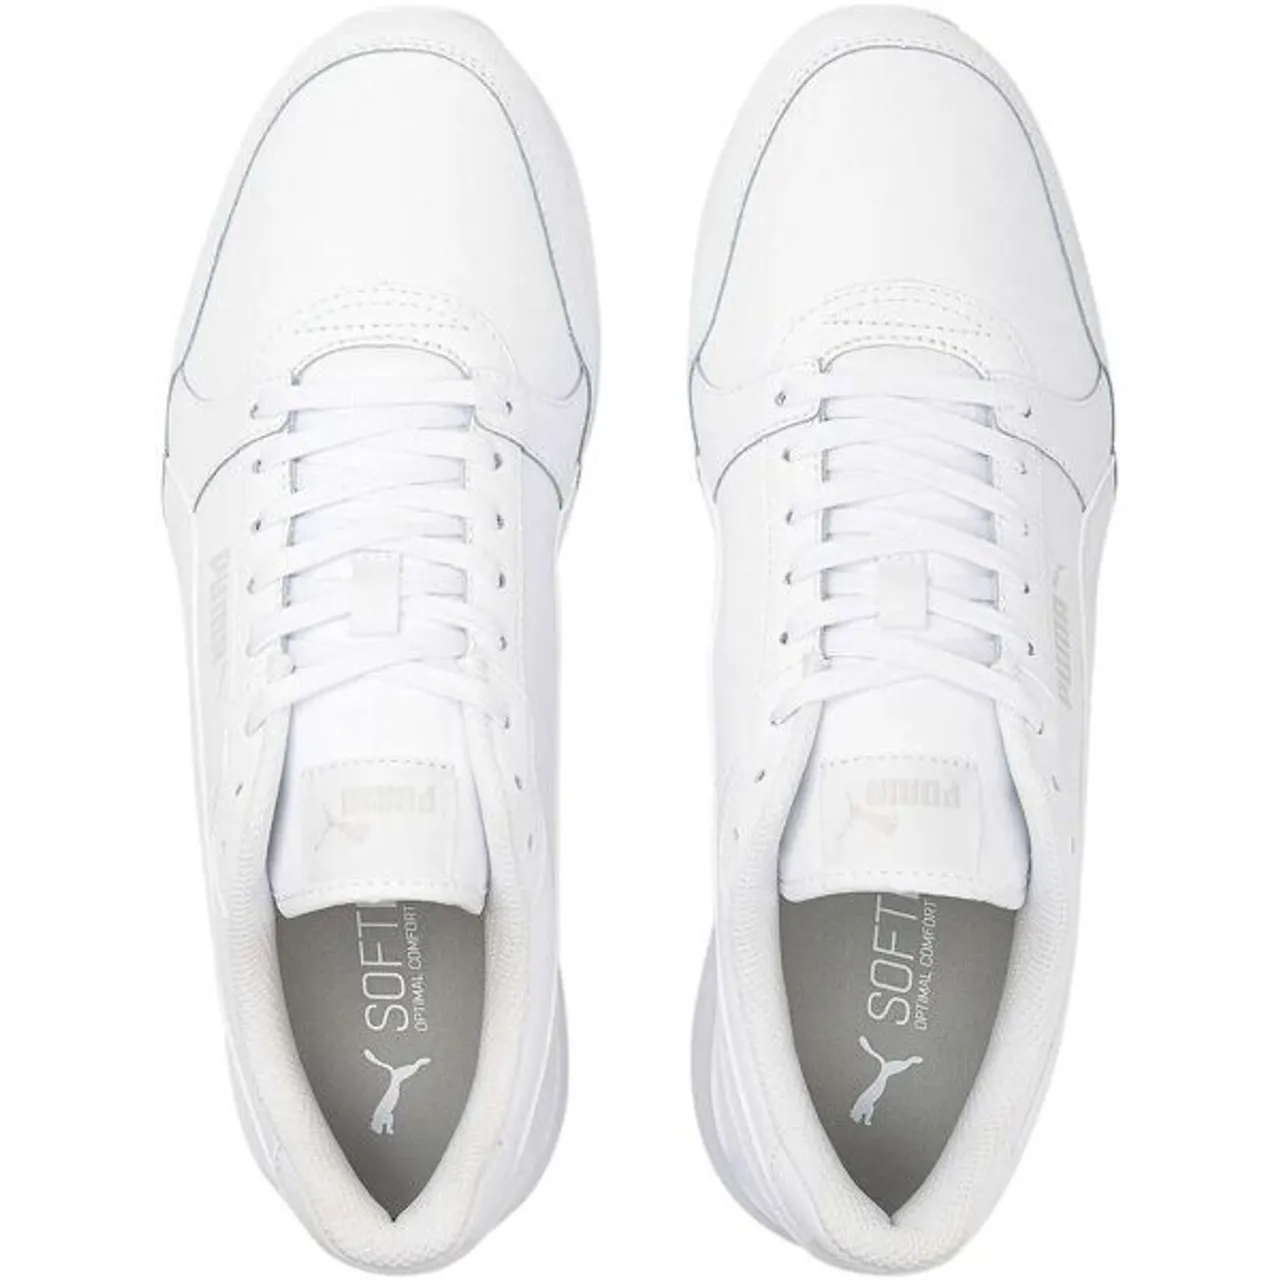 Sneaker PUMA "ST RUNNER V3 L" Gr. 44, bunt (puma white, puma gray violet) Schuhe Puma